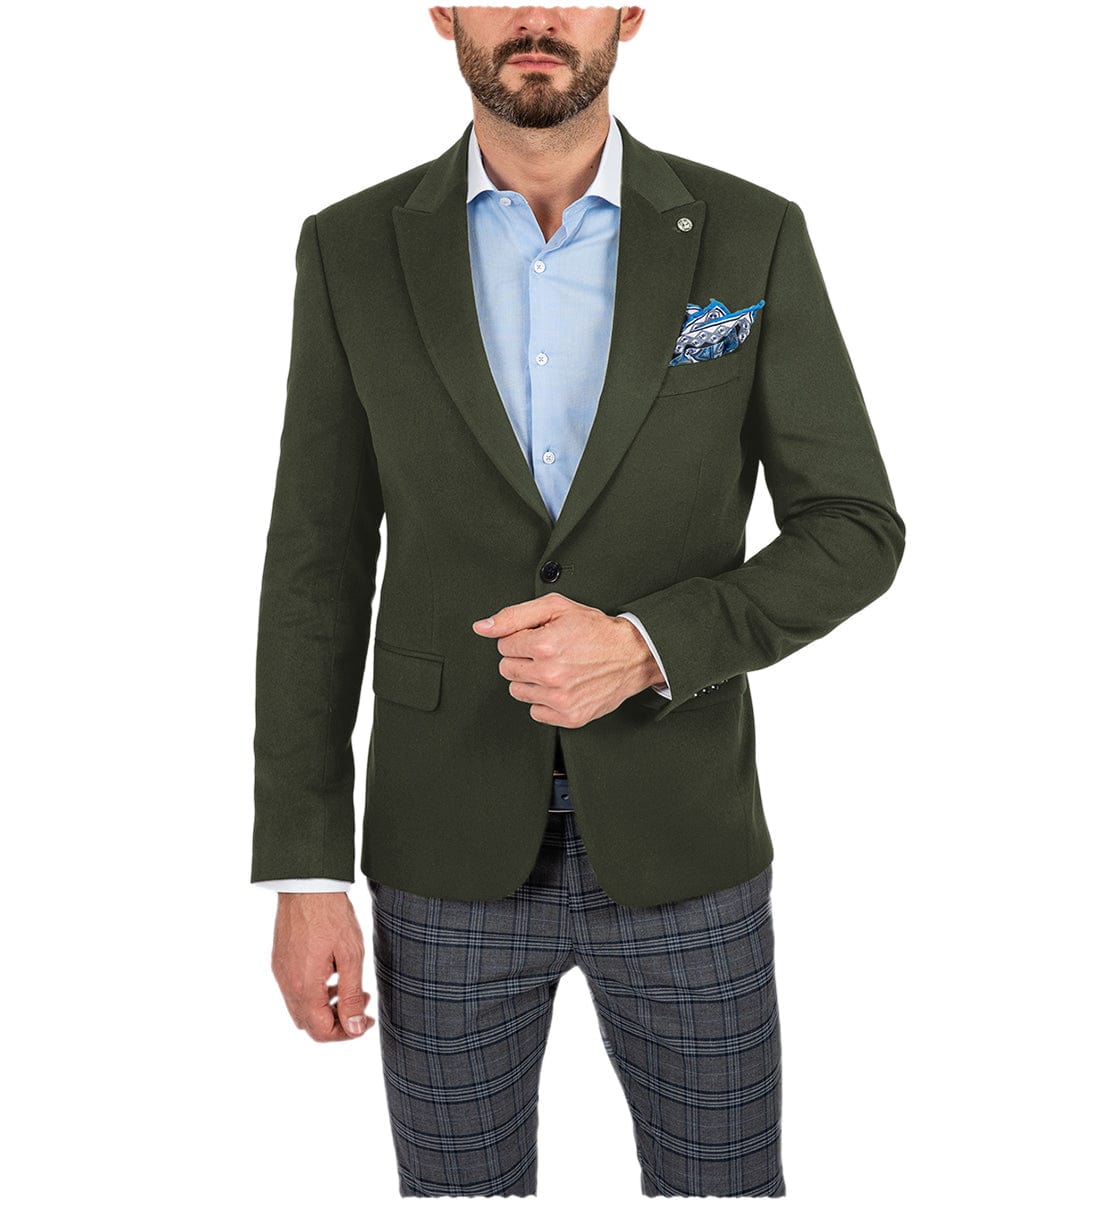 ceehuteey Flat Fashion Men's Flap pocket Suit Blazer